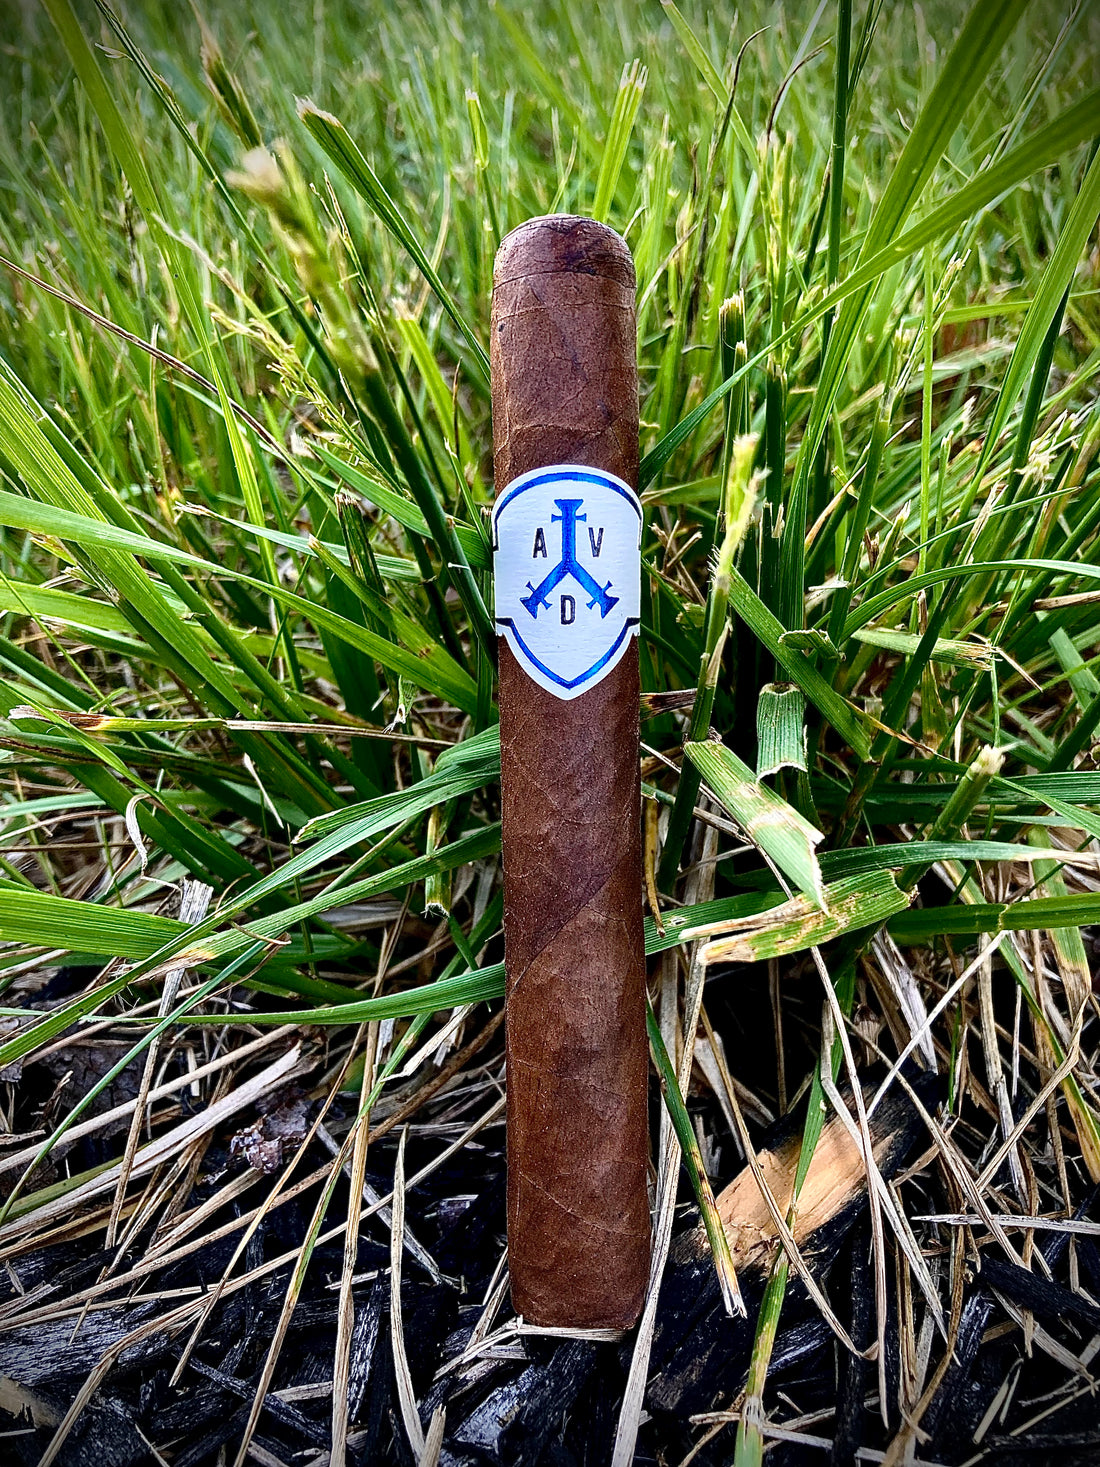 Yard Work Sessions: ADVentura Cigars The Navigator Pinzon